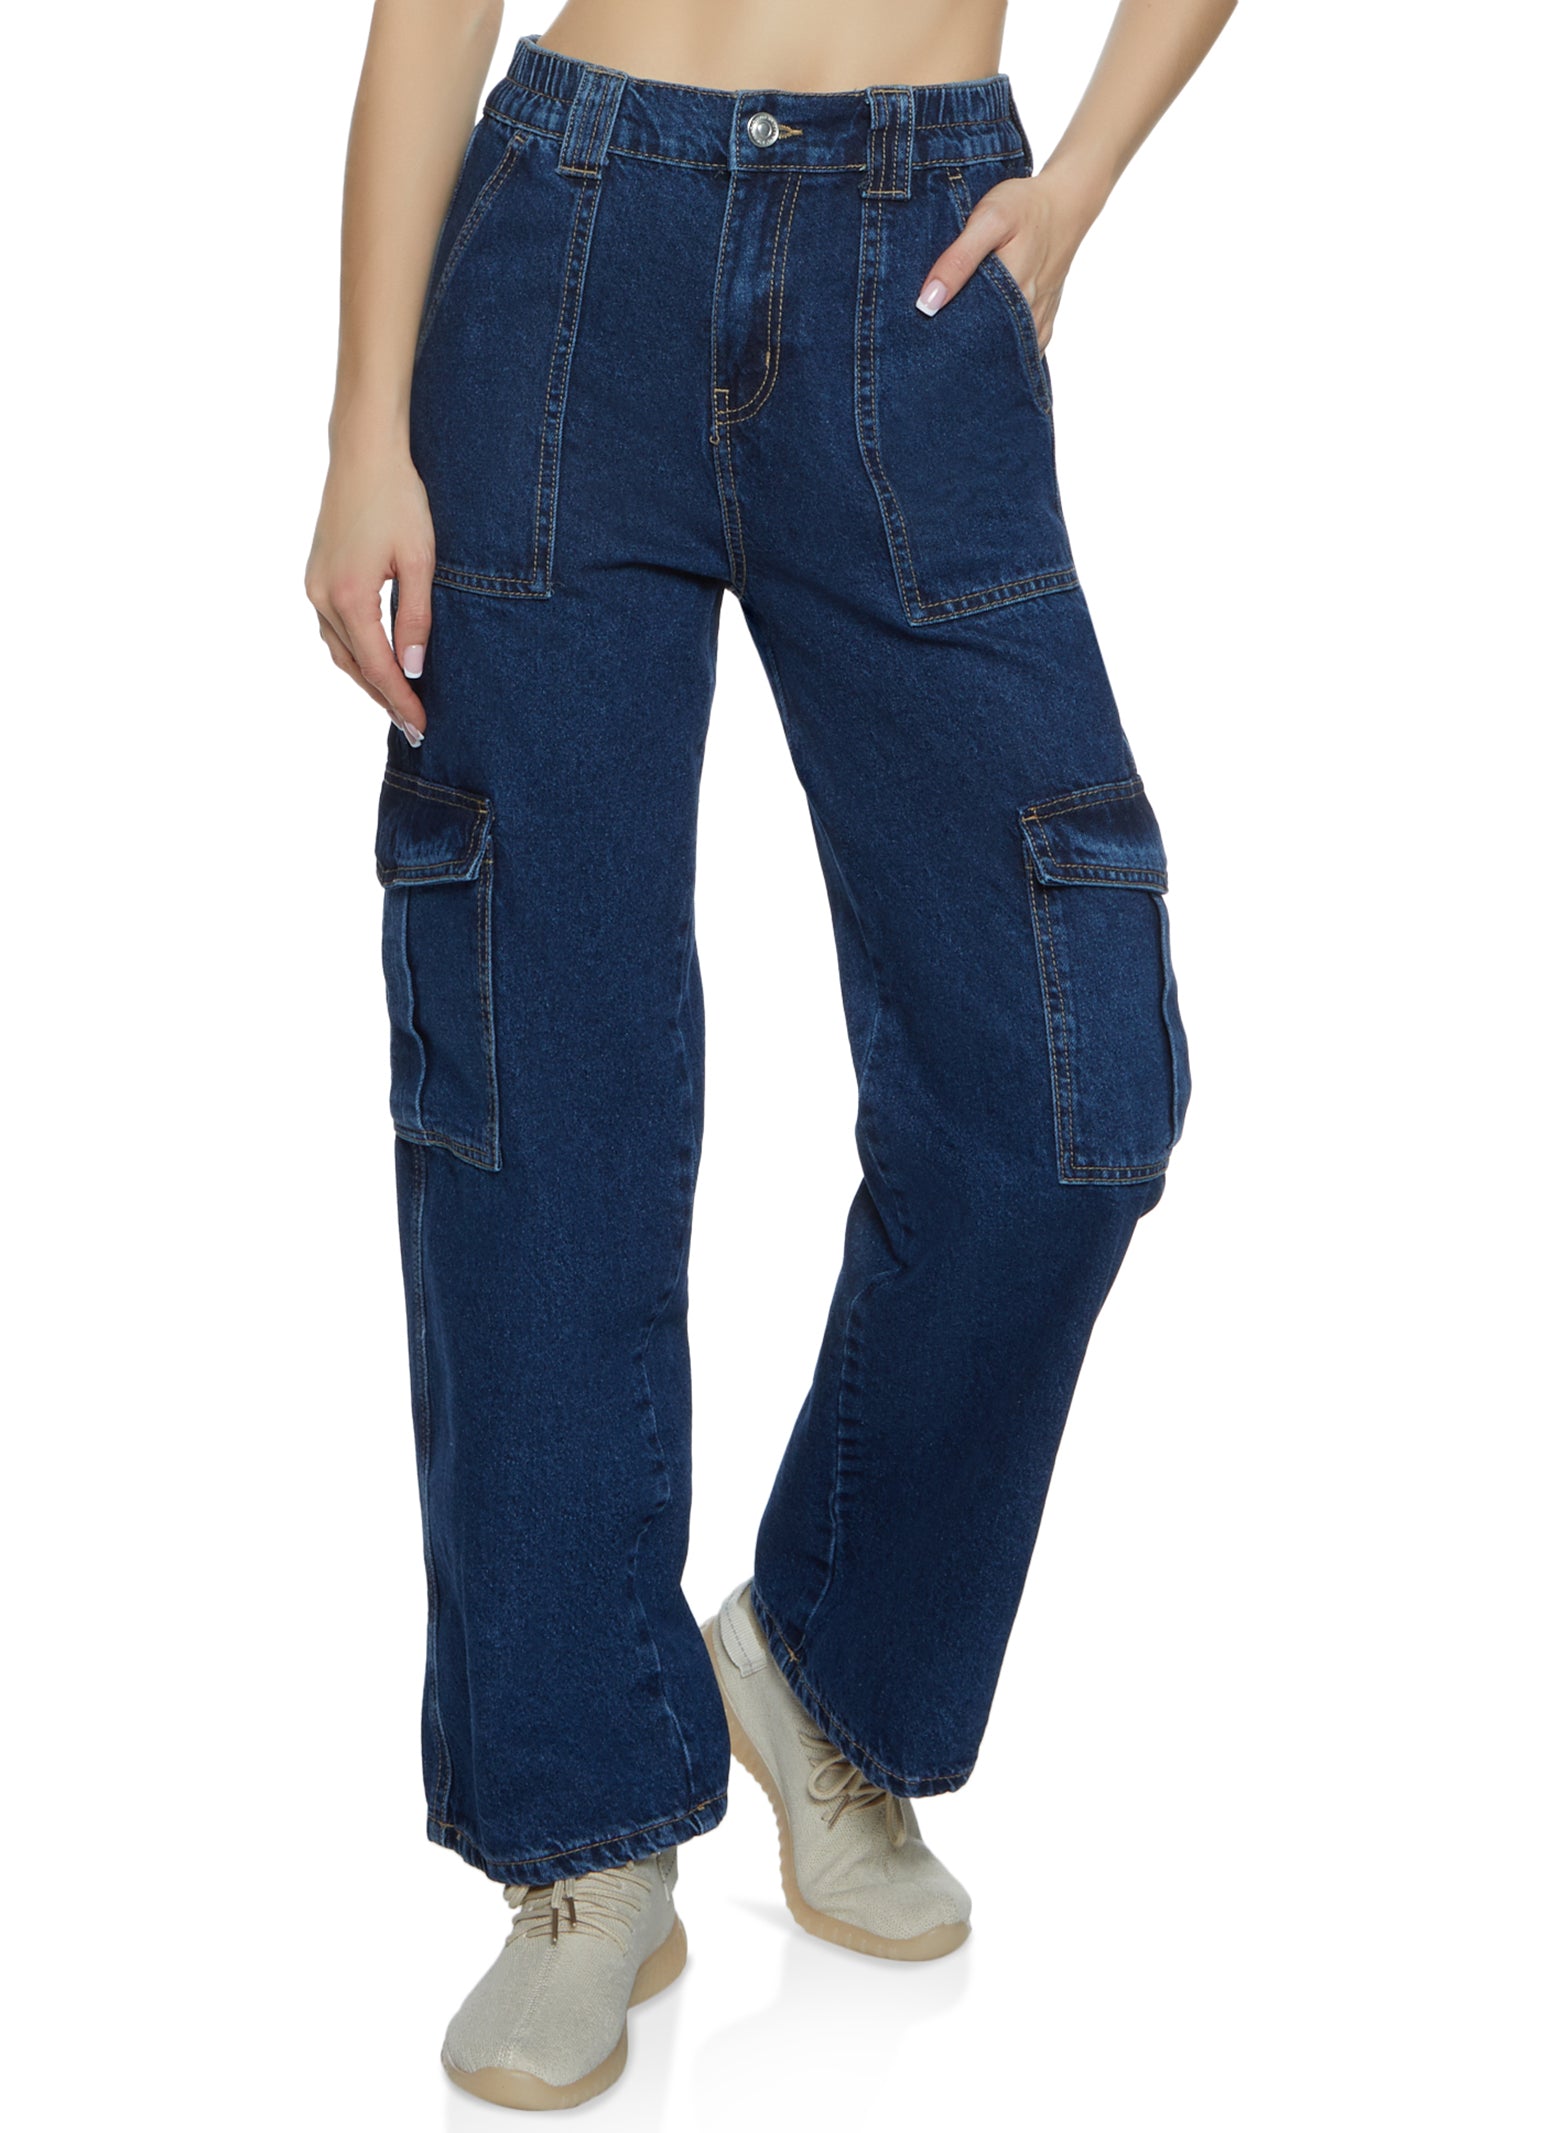 Wide Leg Cargo Pants Women Jeans Vintage Street Distressed Wash